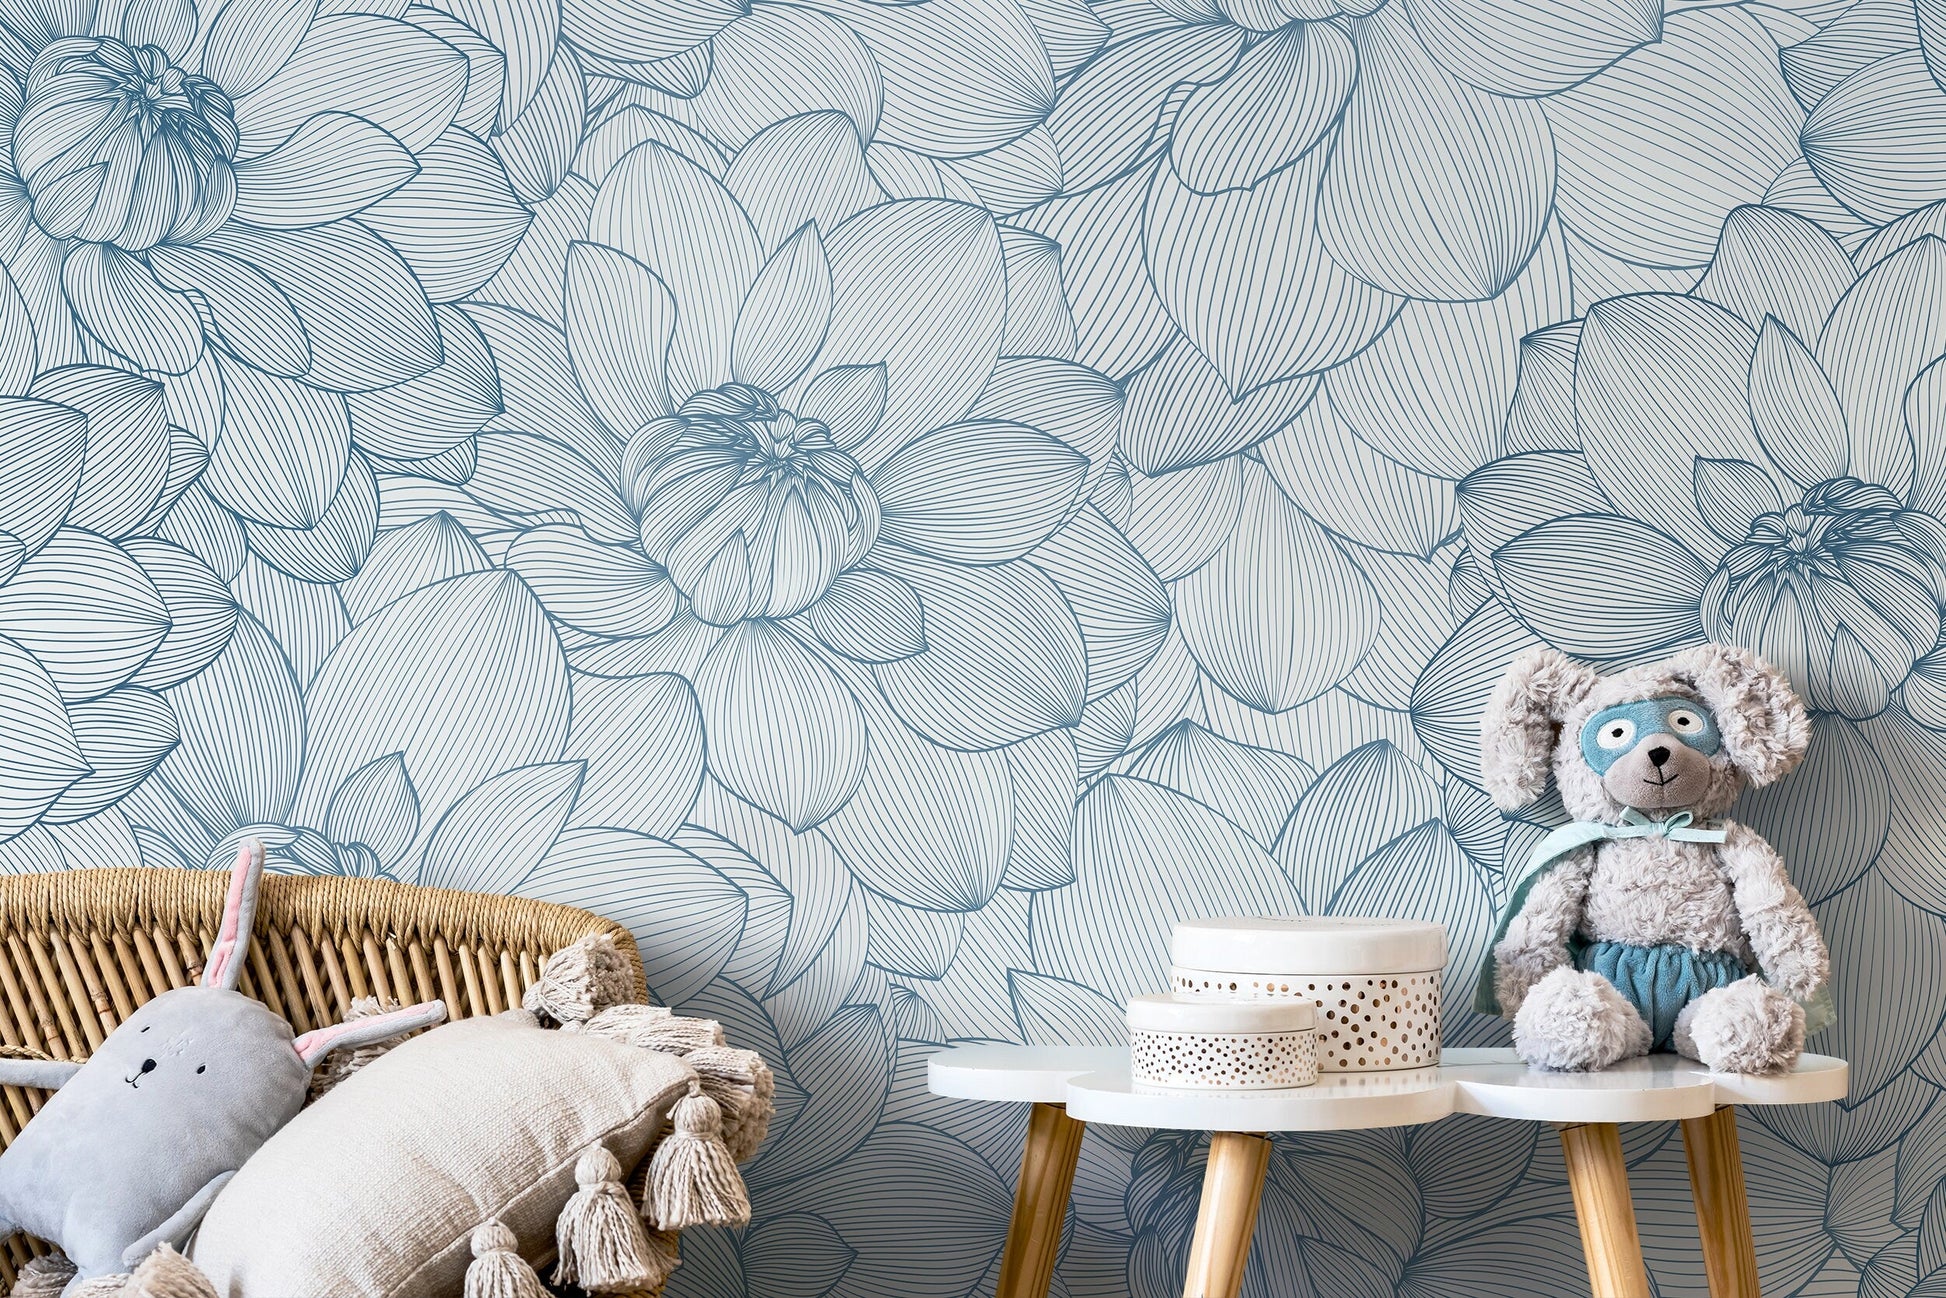 Blue Peony Floral Wallpaper / Peel and Stick Wallpaper Removable Wallpaper Home Decor Wall Art Wall Decor Room Decor - D142